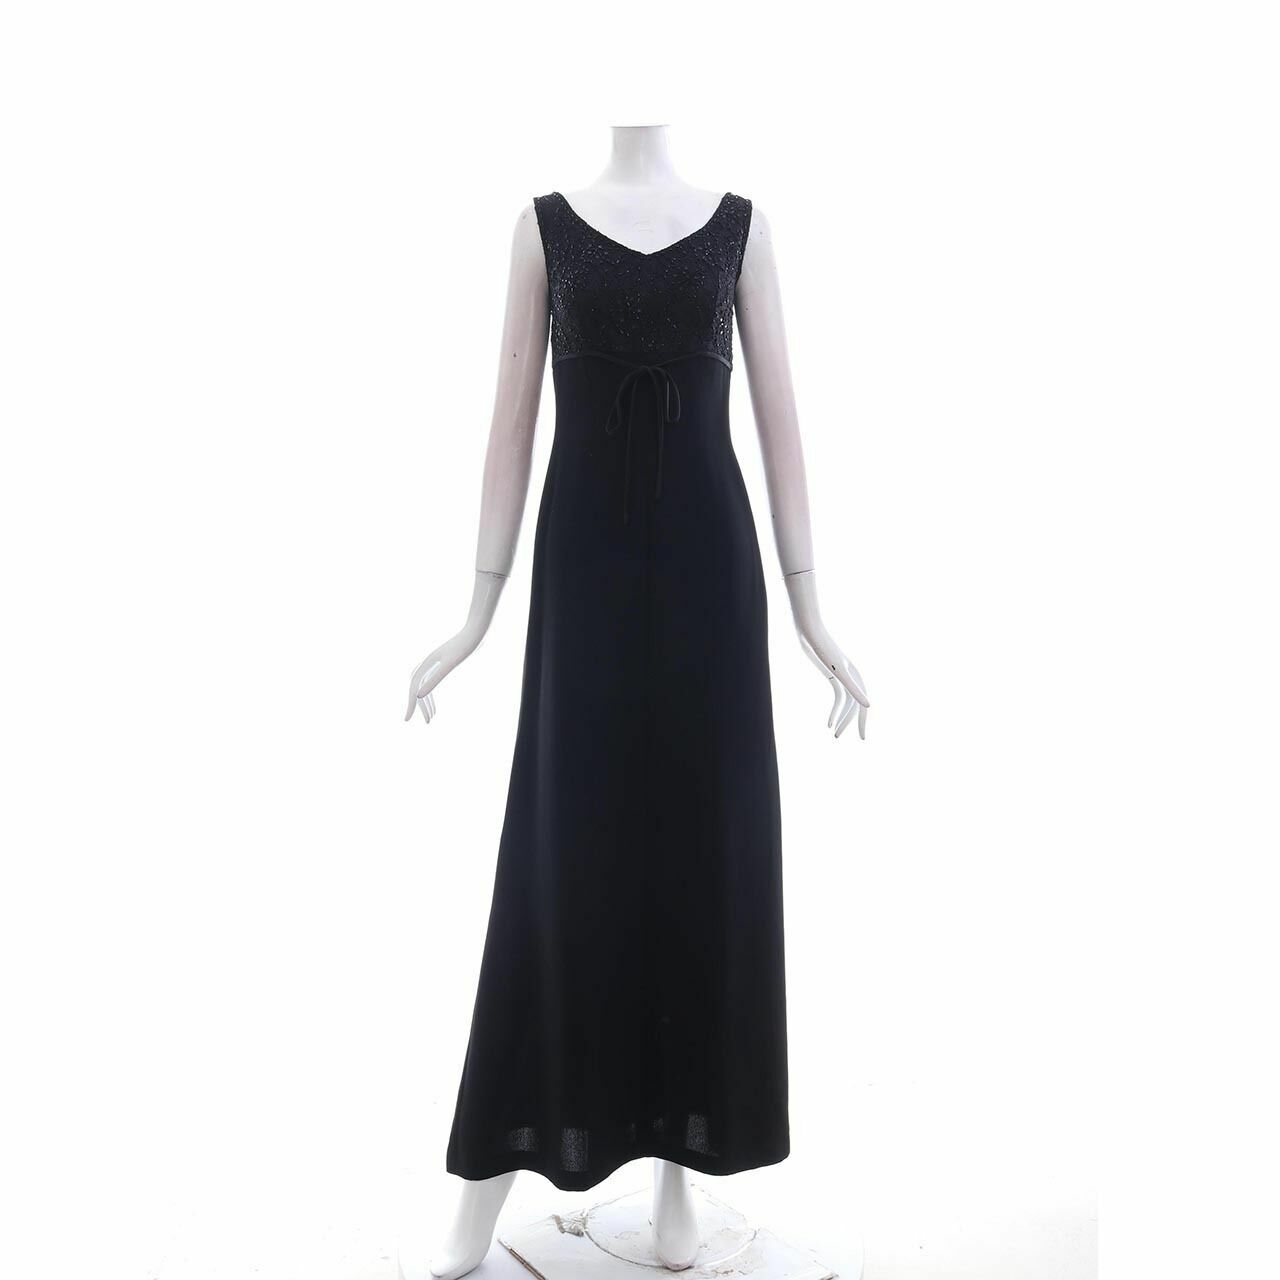 VOTUM By Sebastian & Cristina Black Long Dress